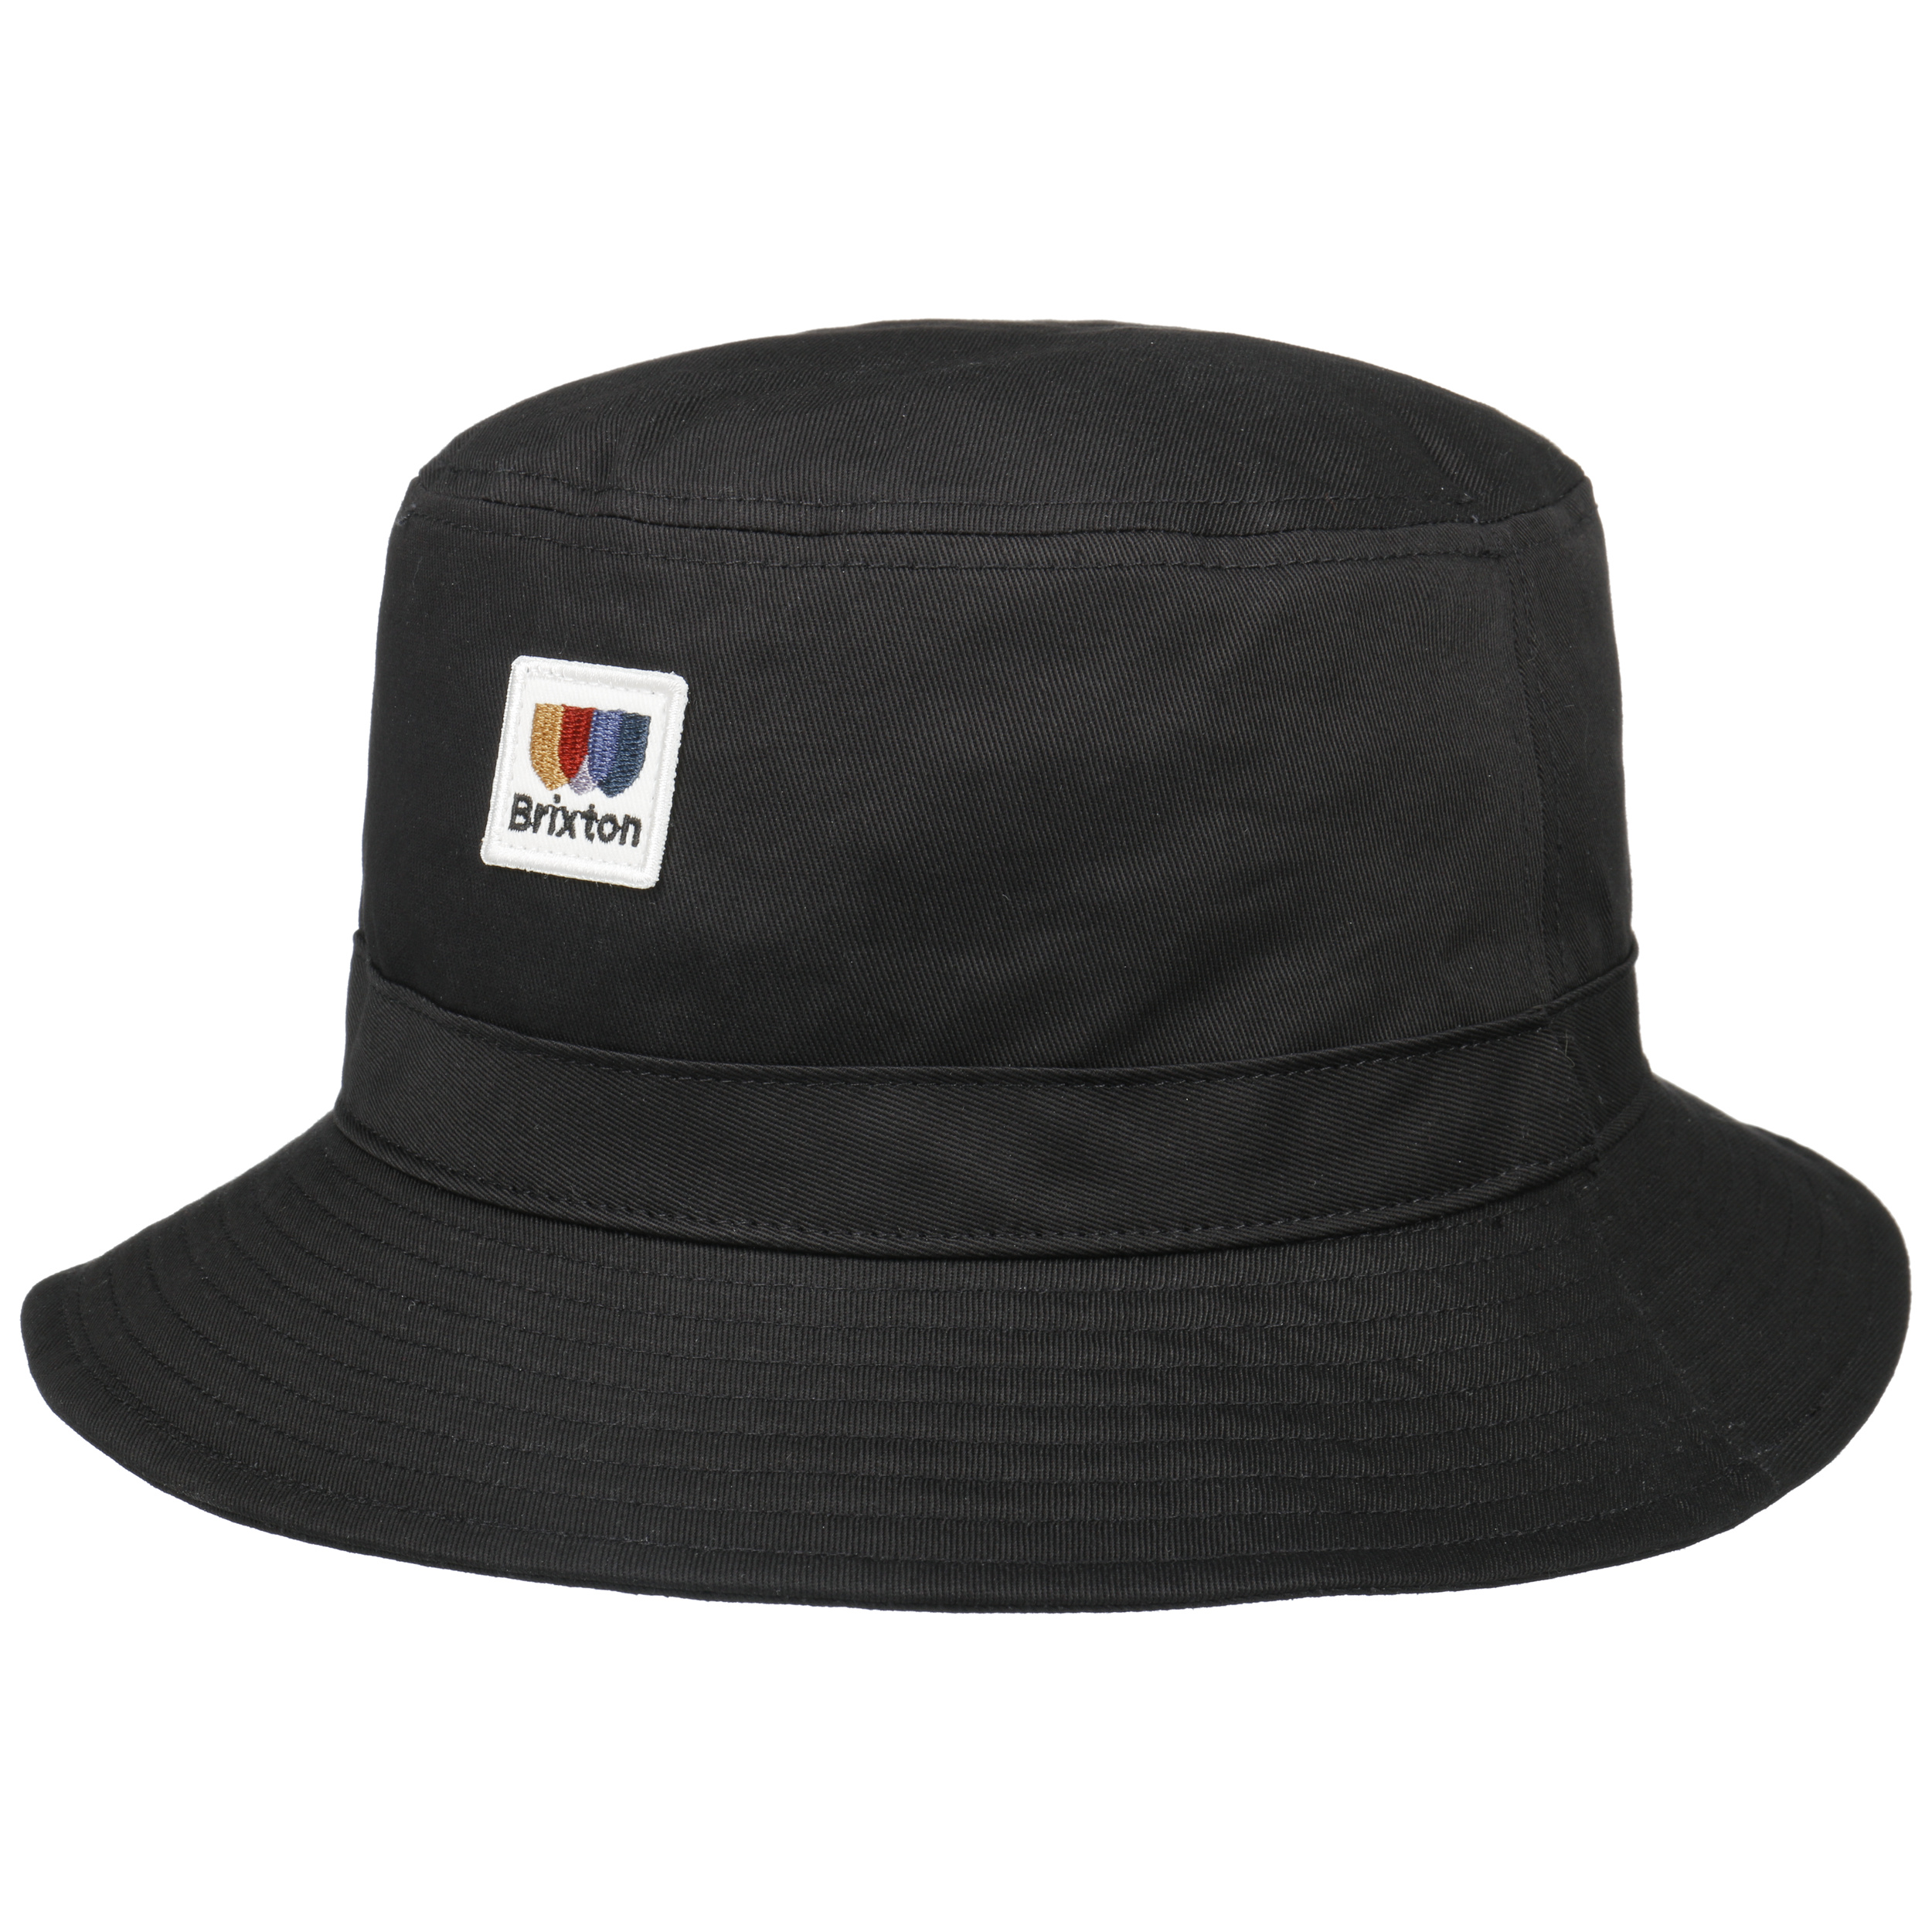 Alton Packable Bucket Hat by Brixton